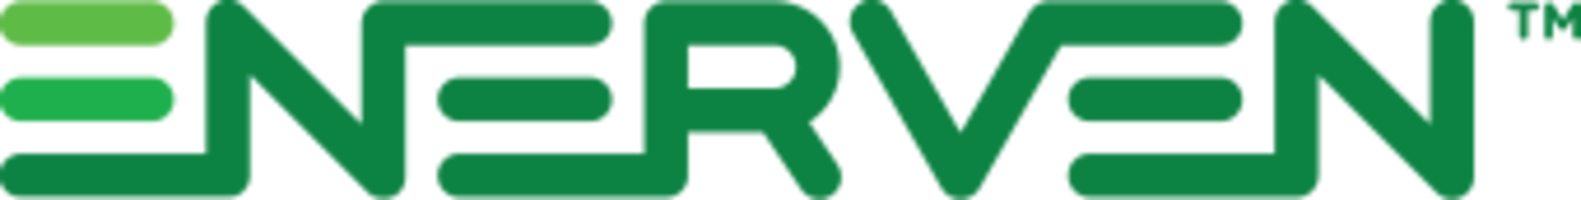 enerven-logo-resized-1